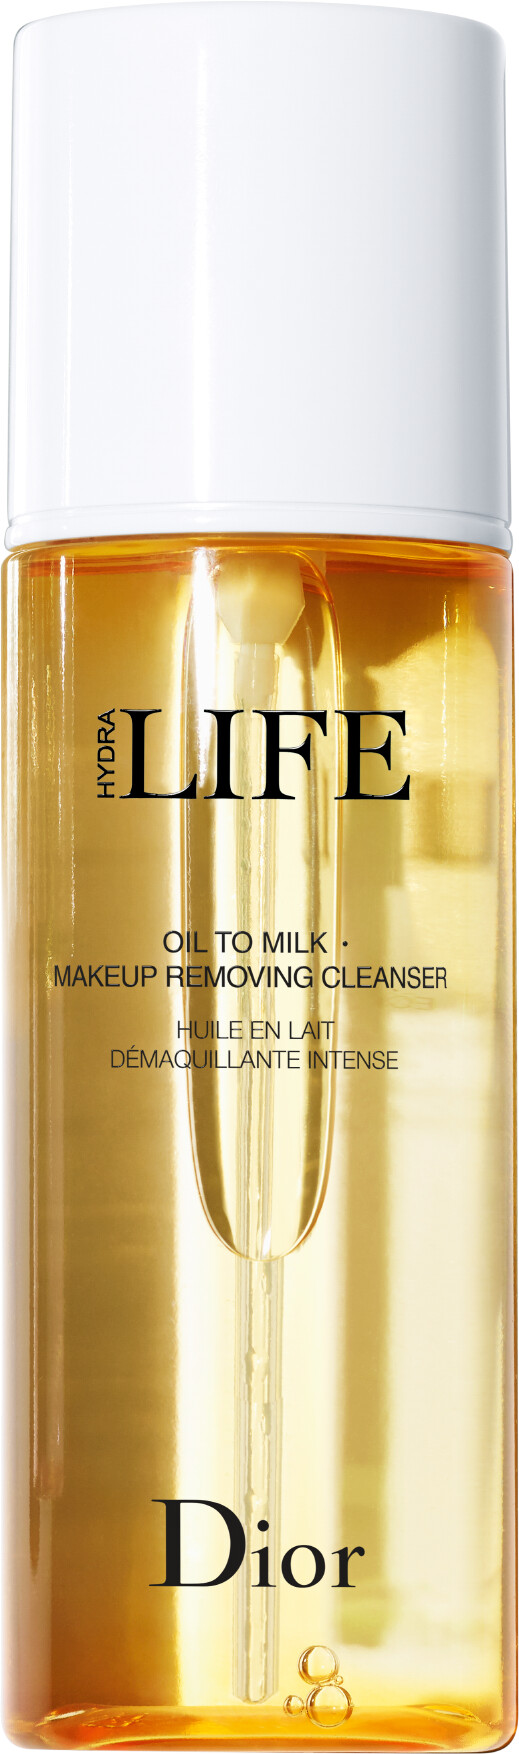 dior life oil to milk